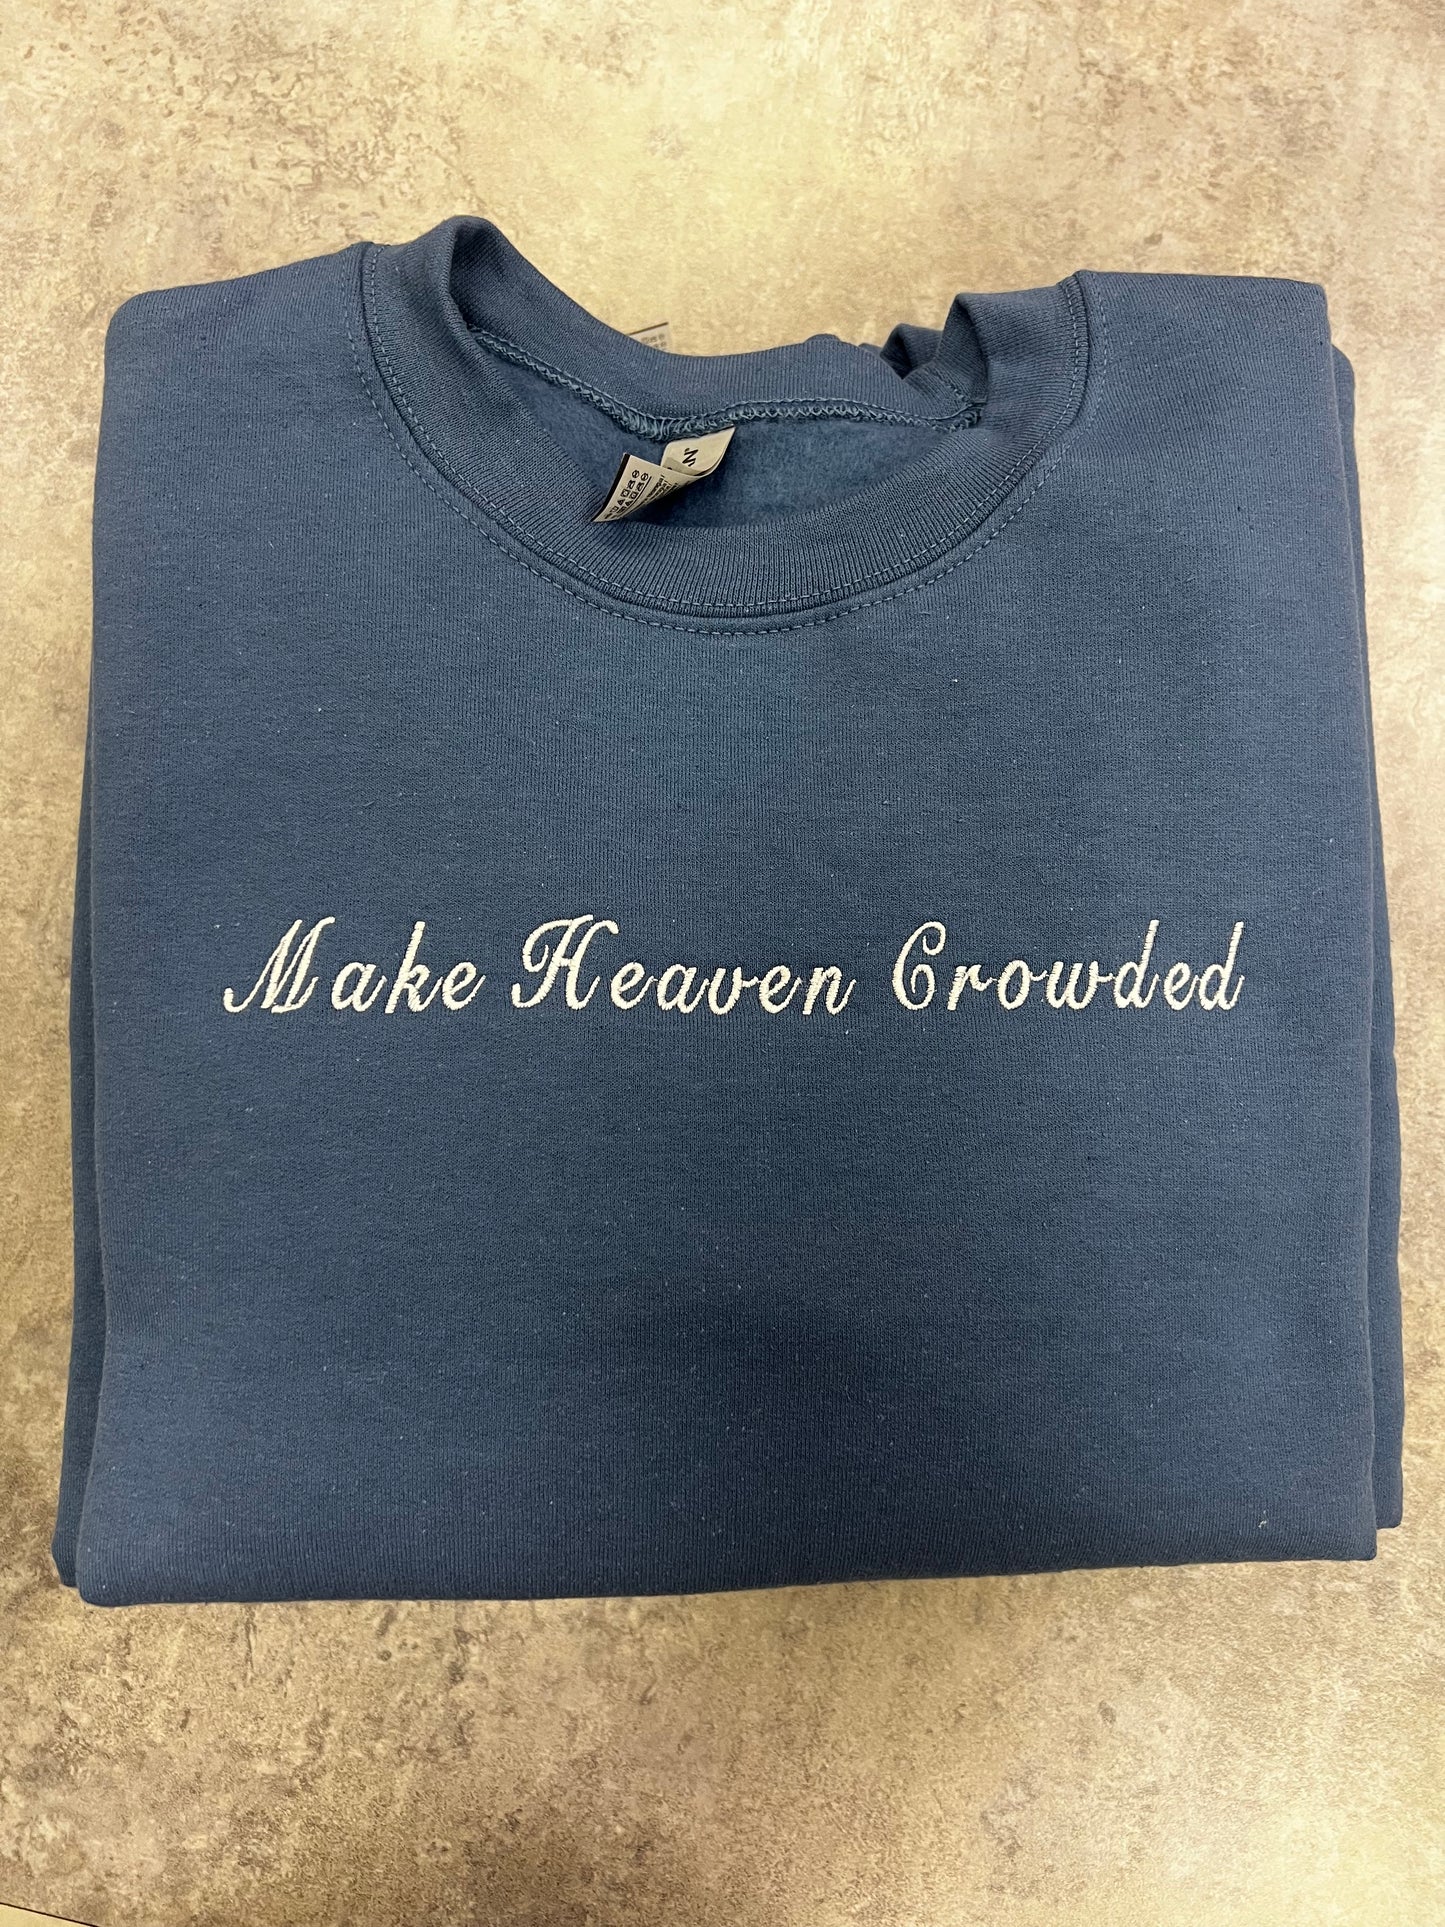 Make Heaven Crowded Embroidery